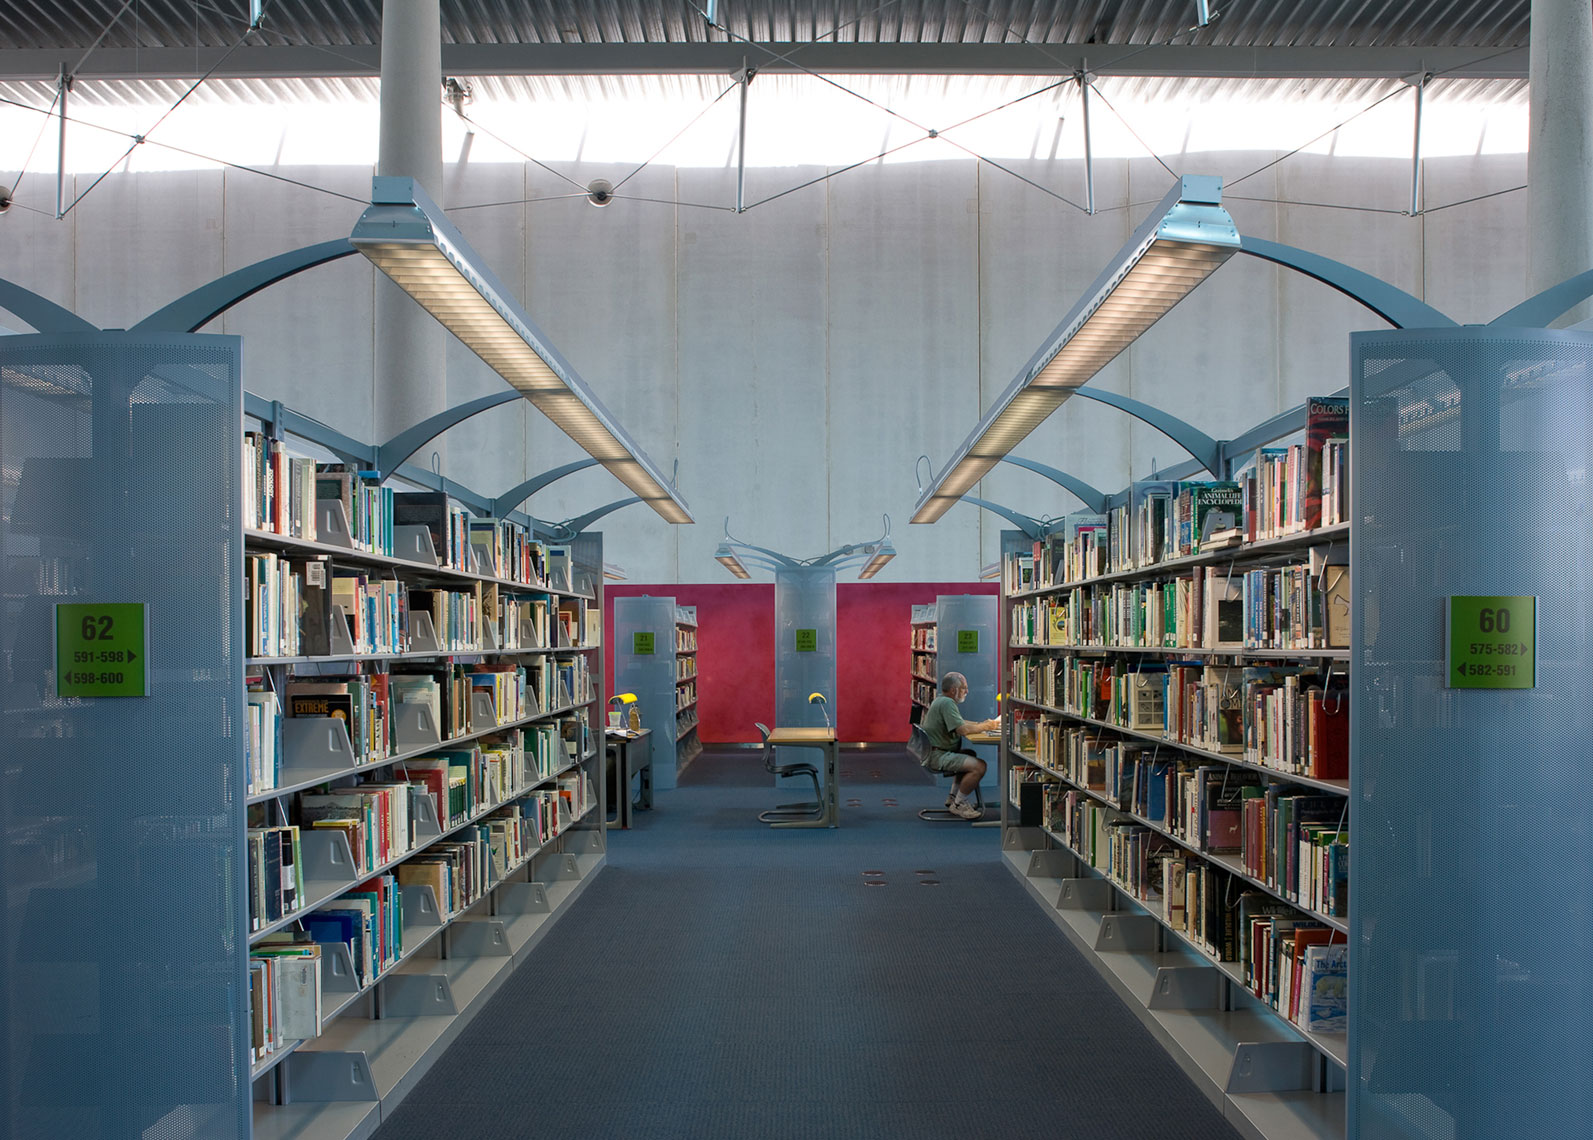 jeff-green-phoenix-central-library-interior-architecture-stacks